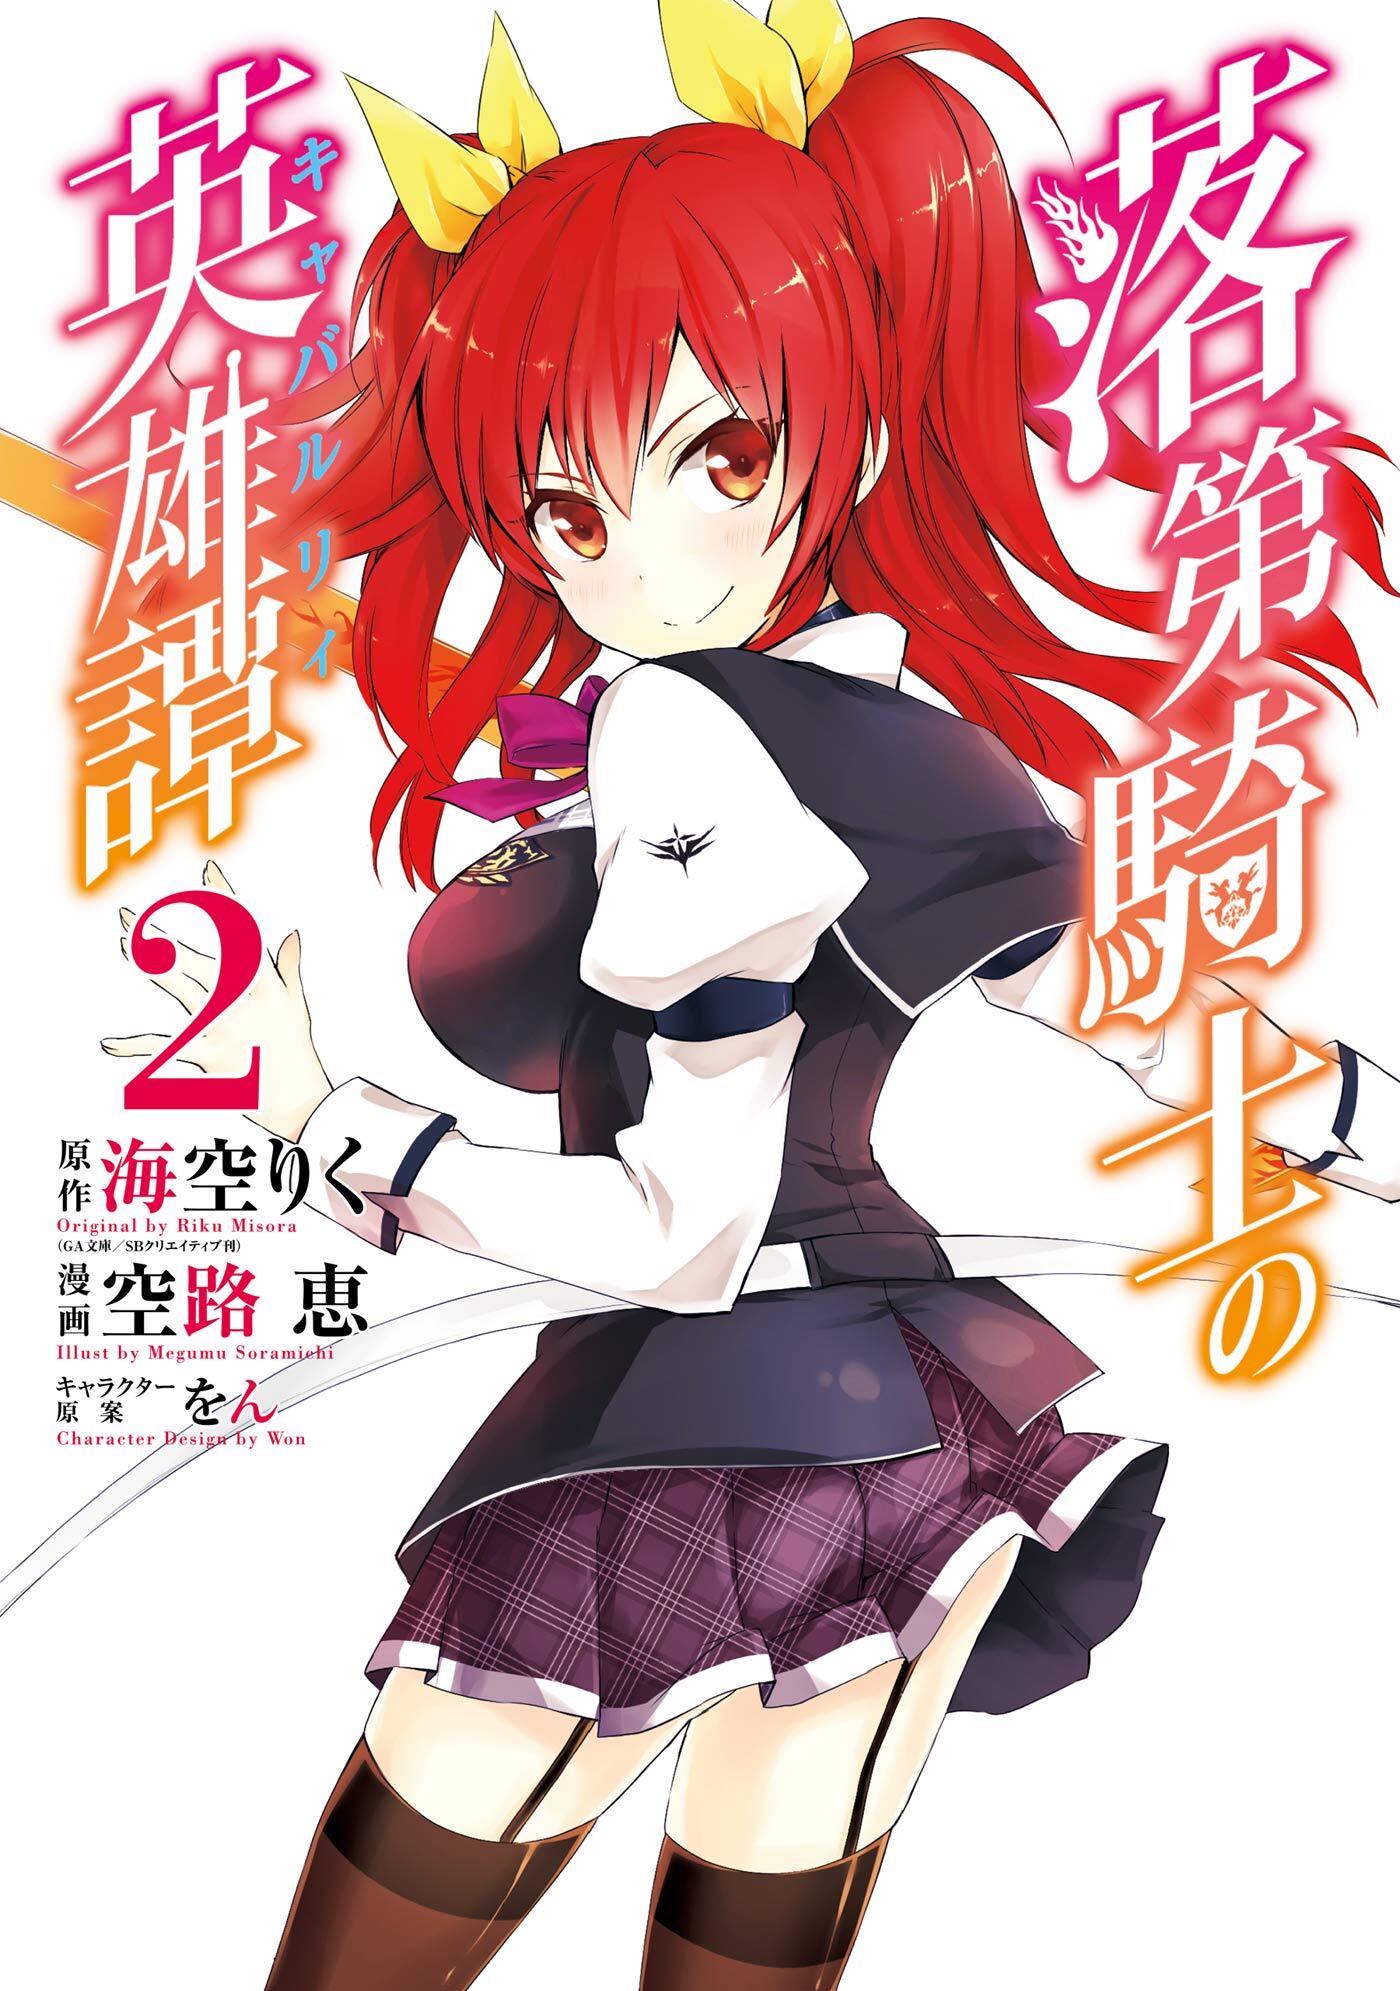 Read Rakudai Kishi No Eiyuutan Manga on Mangakakalot